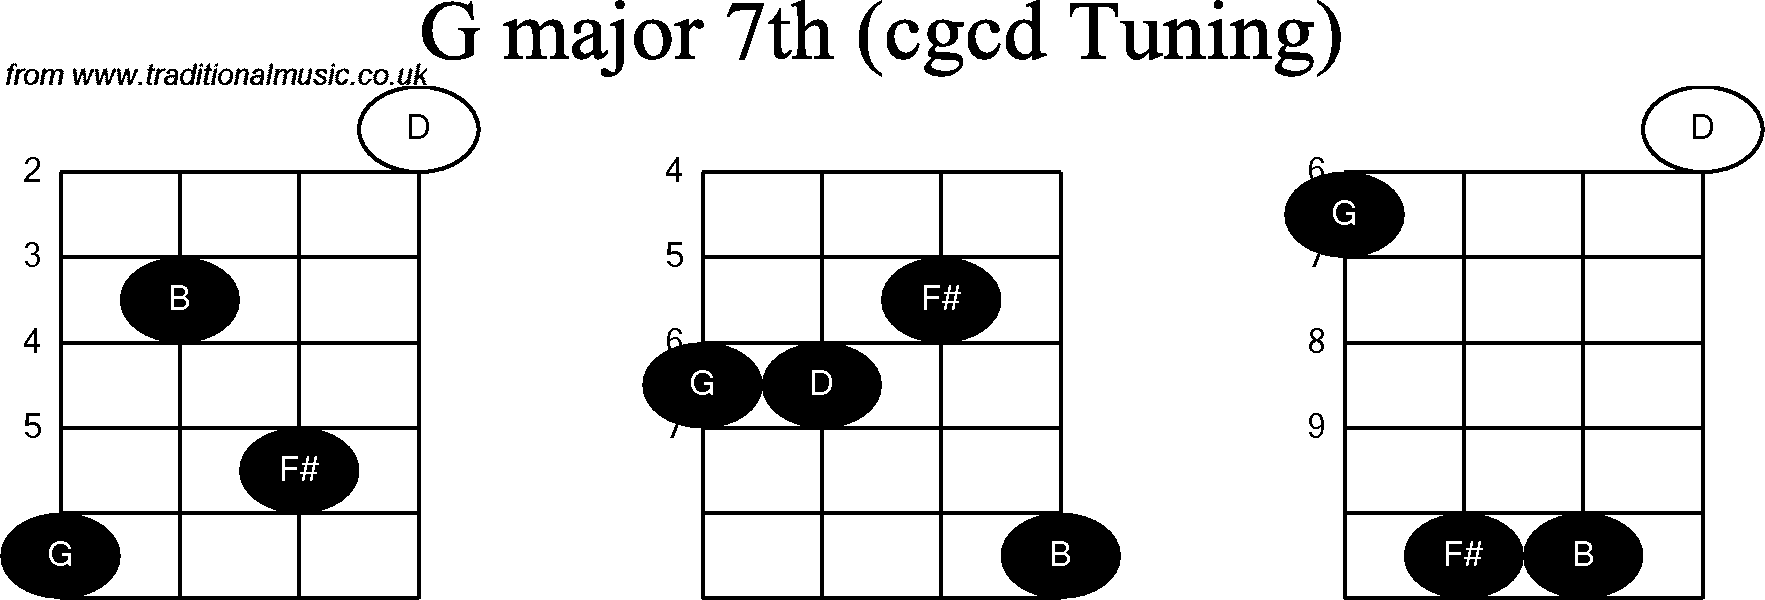 Chord diagrams for Banjo(Double C) G Major7th